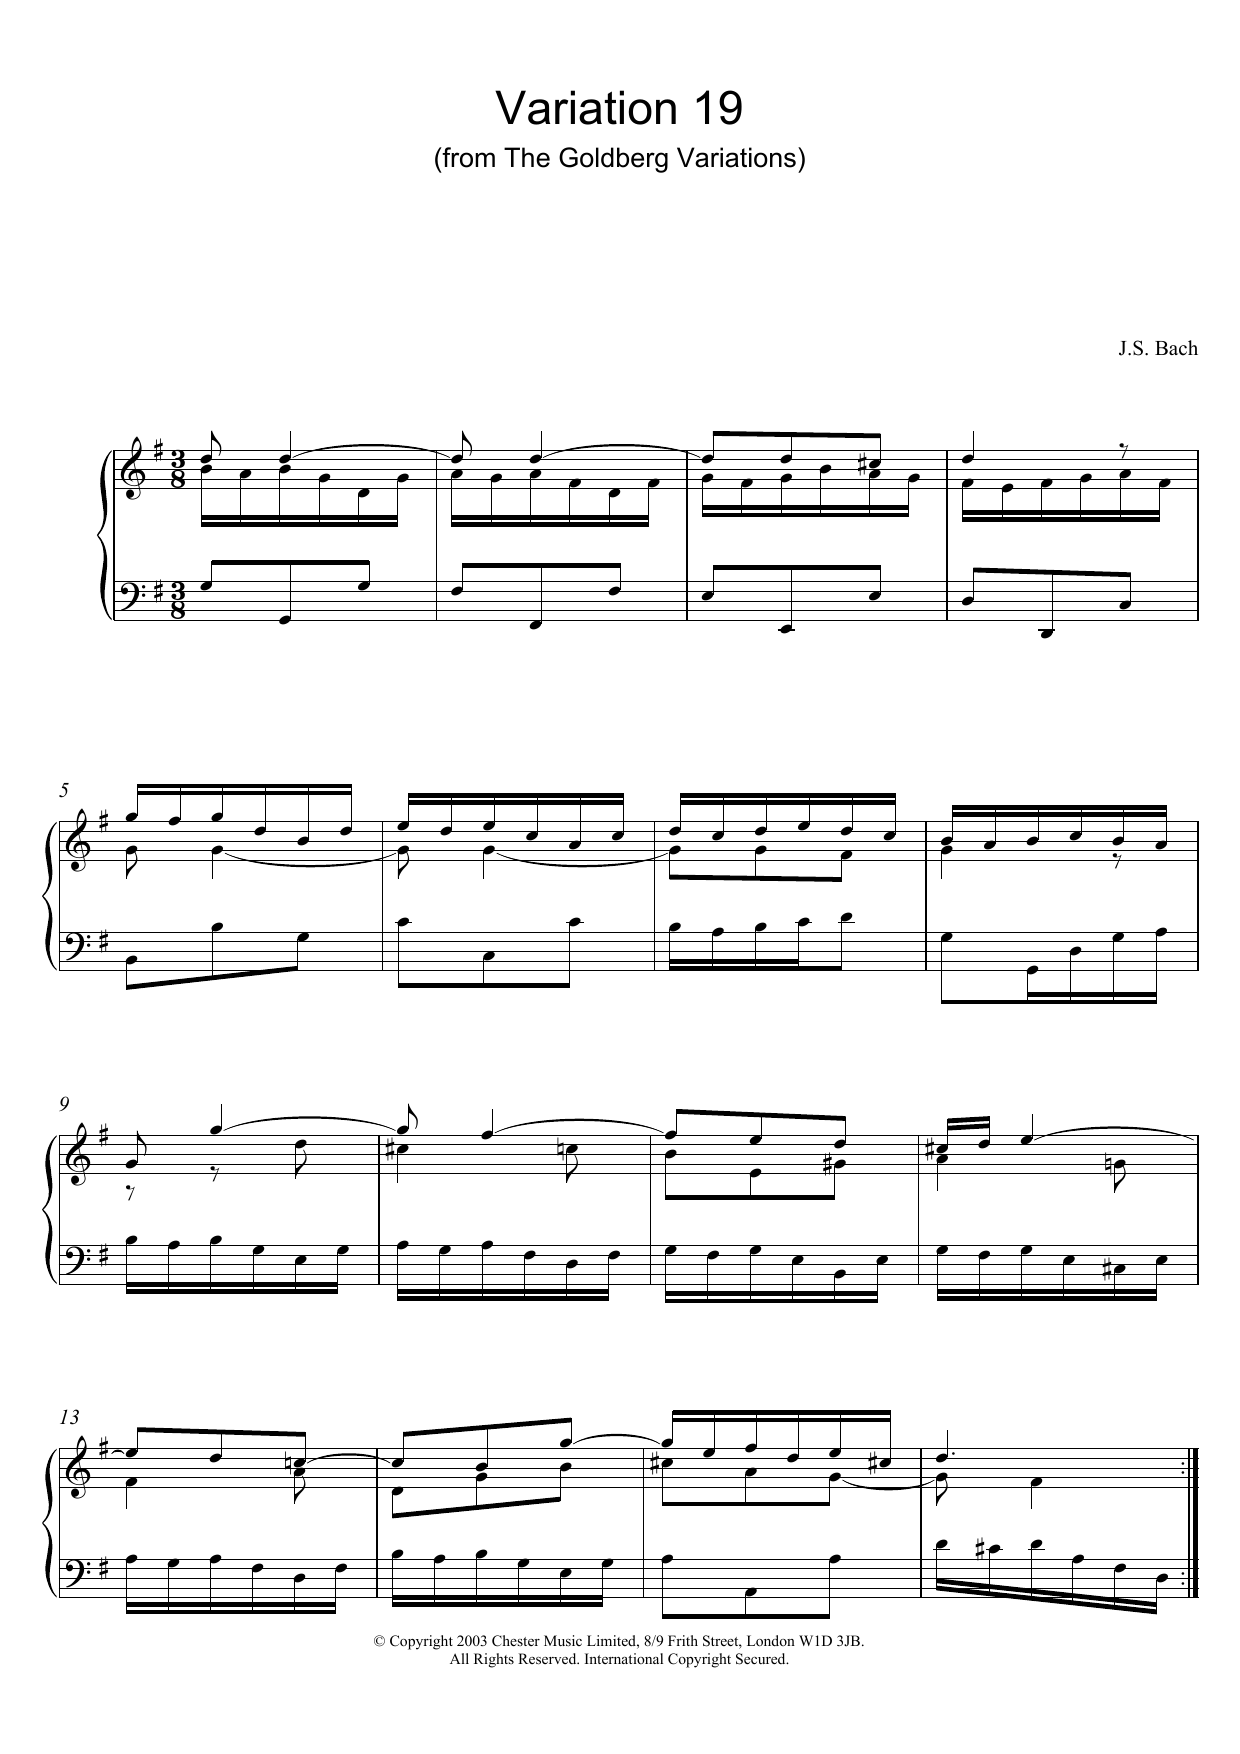 Johann Sebastian Bach Variation 19 (from The Goldberg Variations) Sheet Music Notes & Chords for Piano - Download or Print PDF